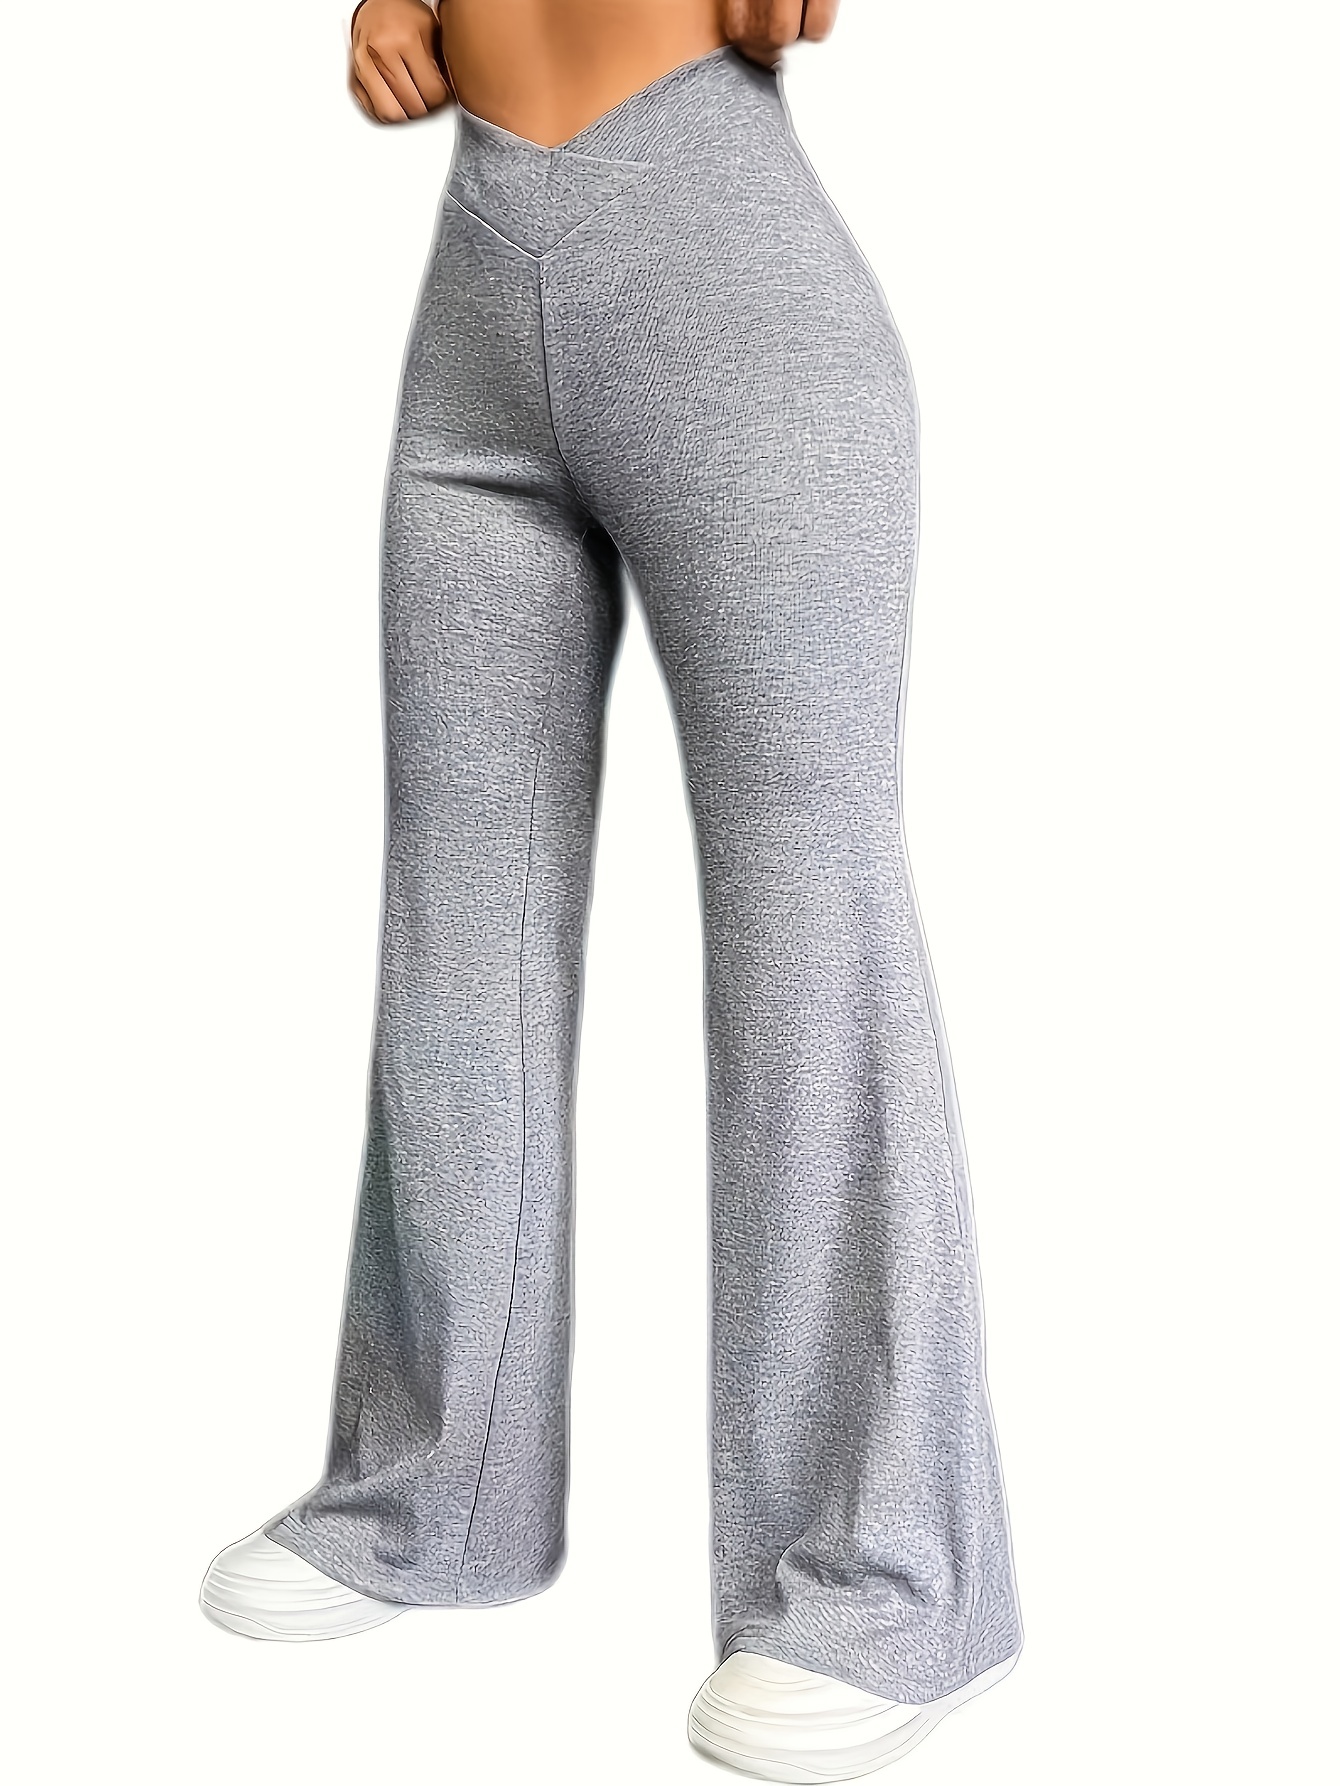 JDEFEG Plus Size Long Yoga Pants for Women 3X Stretchy Waist Pants